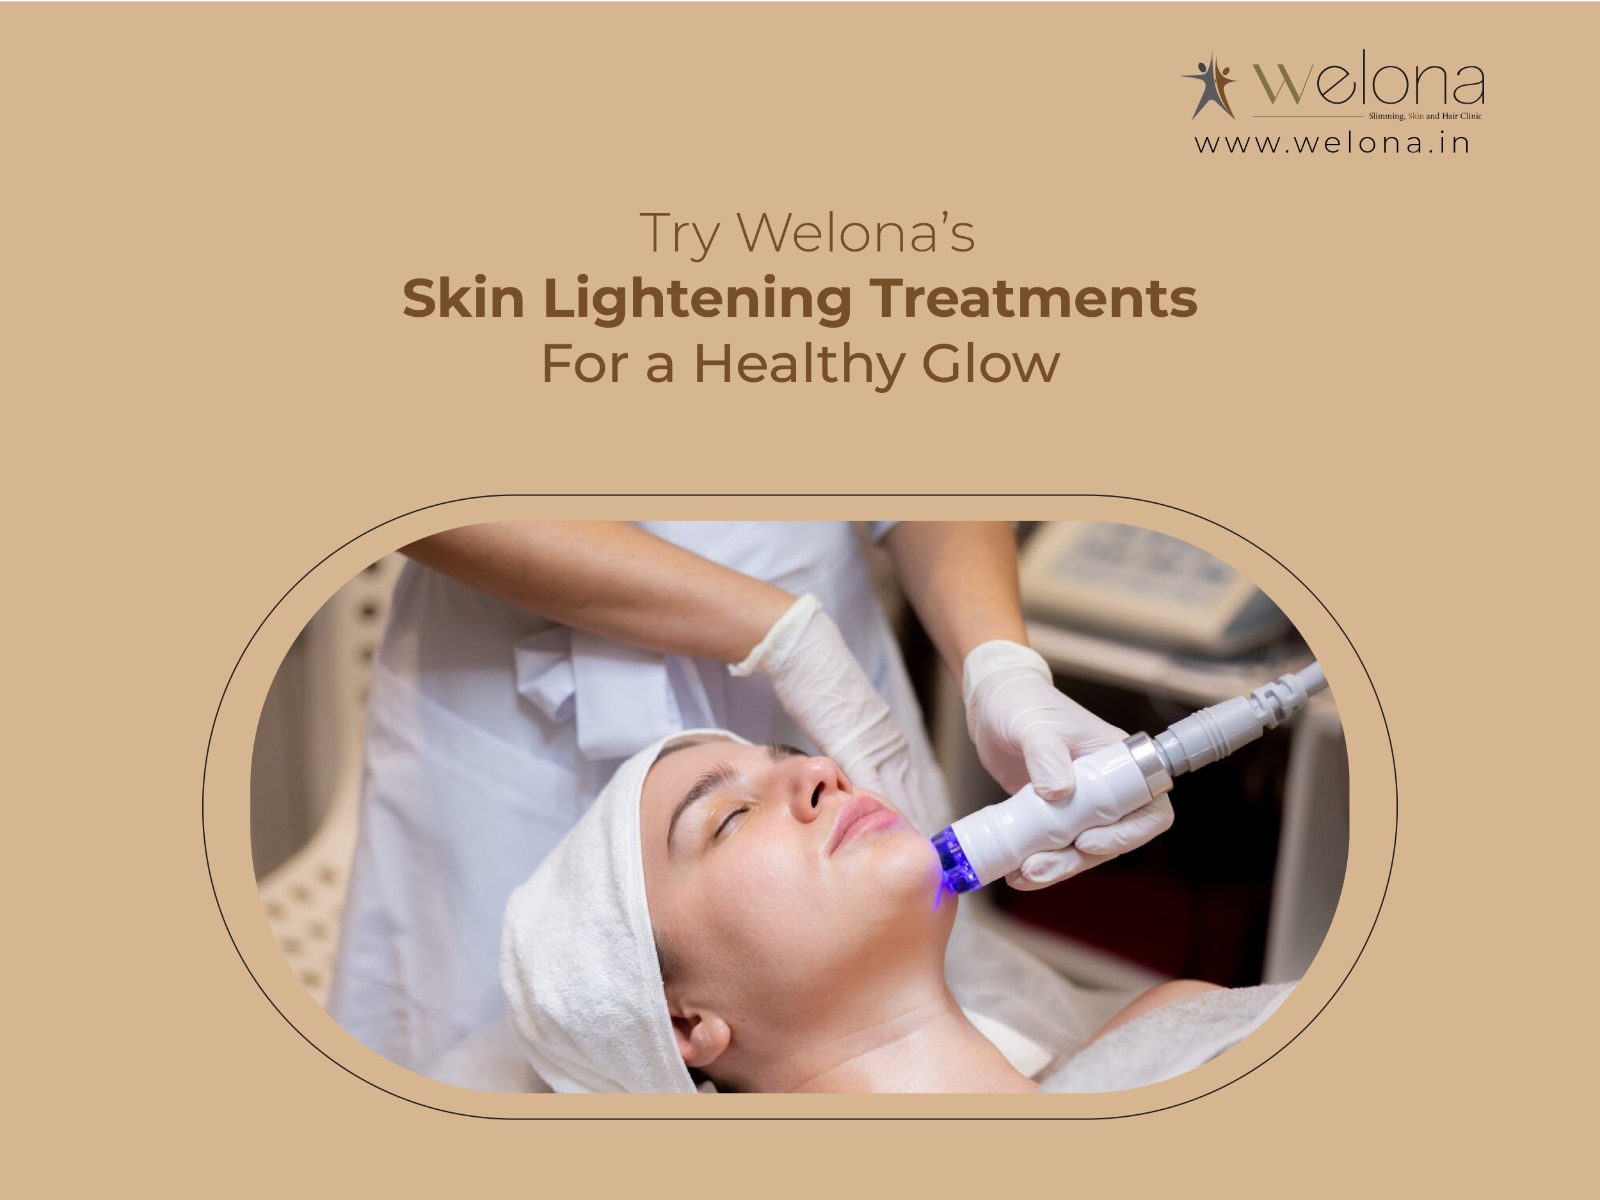 Welona’s Skin Lightening Treatments For a Healthy Glow